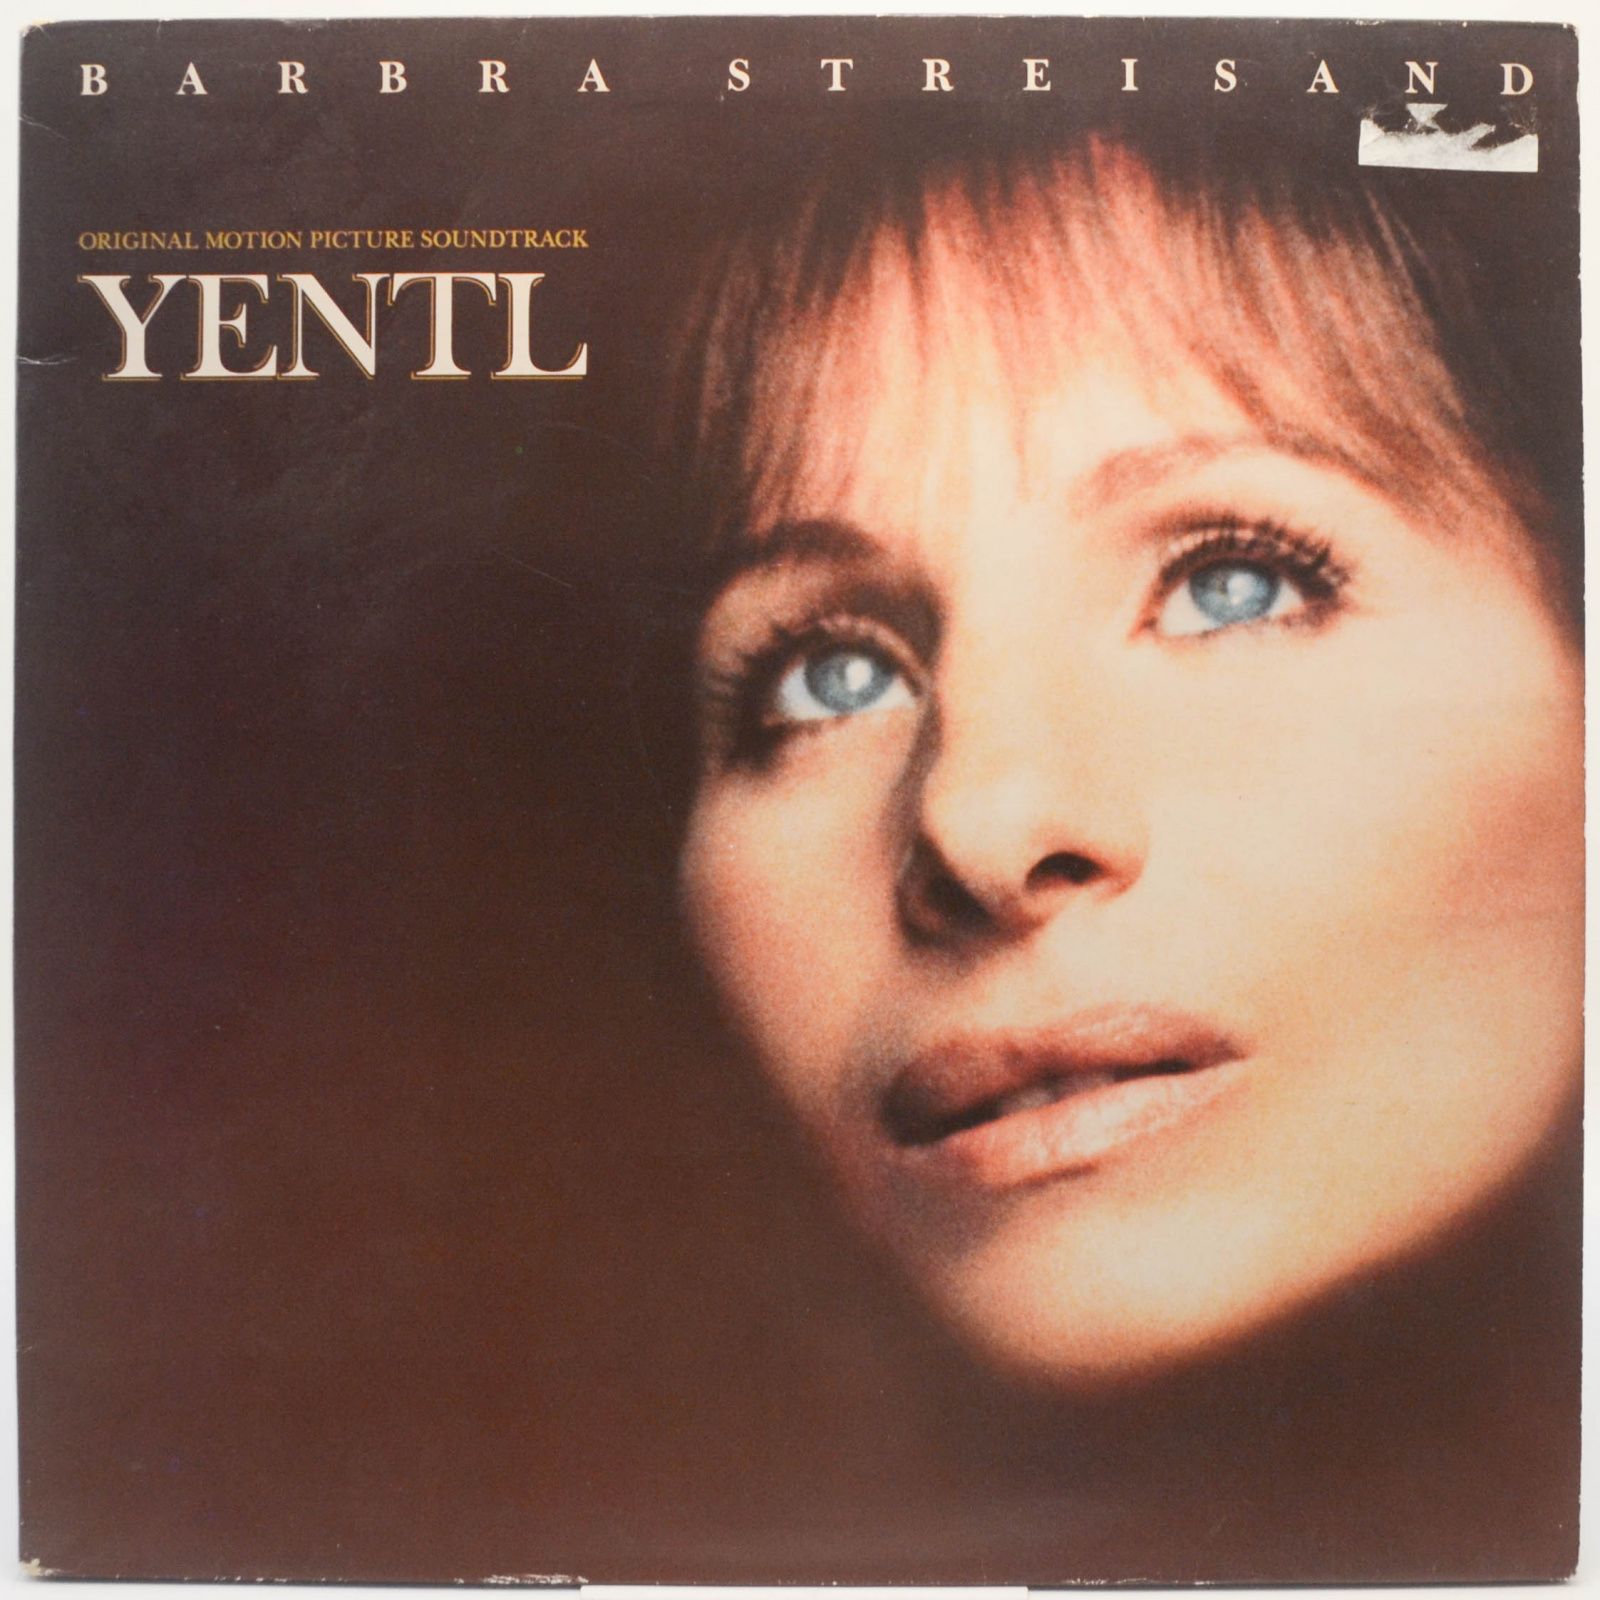 Barbra Streisand — Yentl - Original Motion Picture Soundtrack, 1983